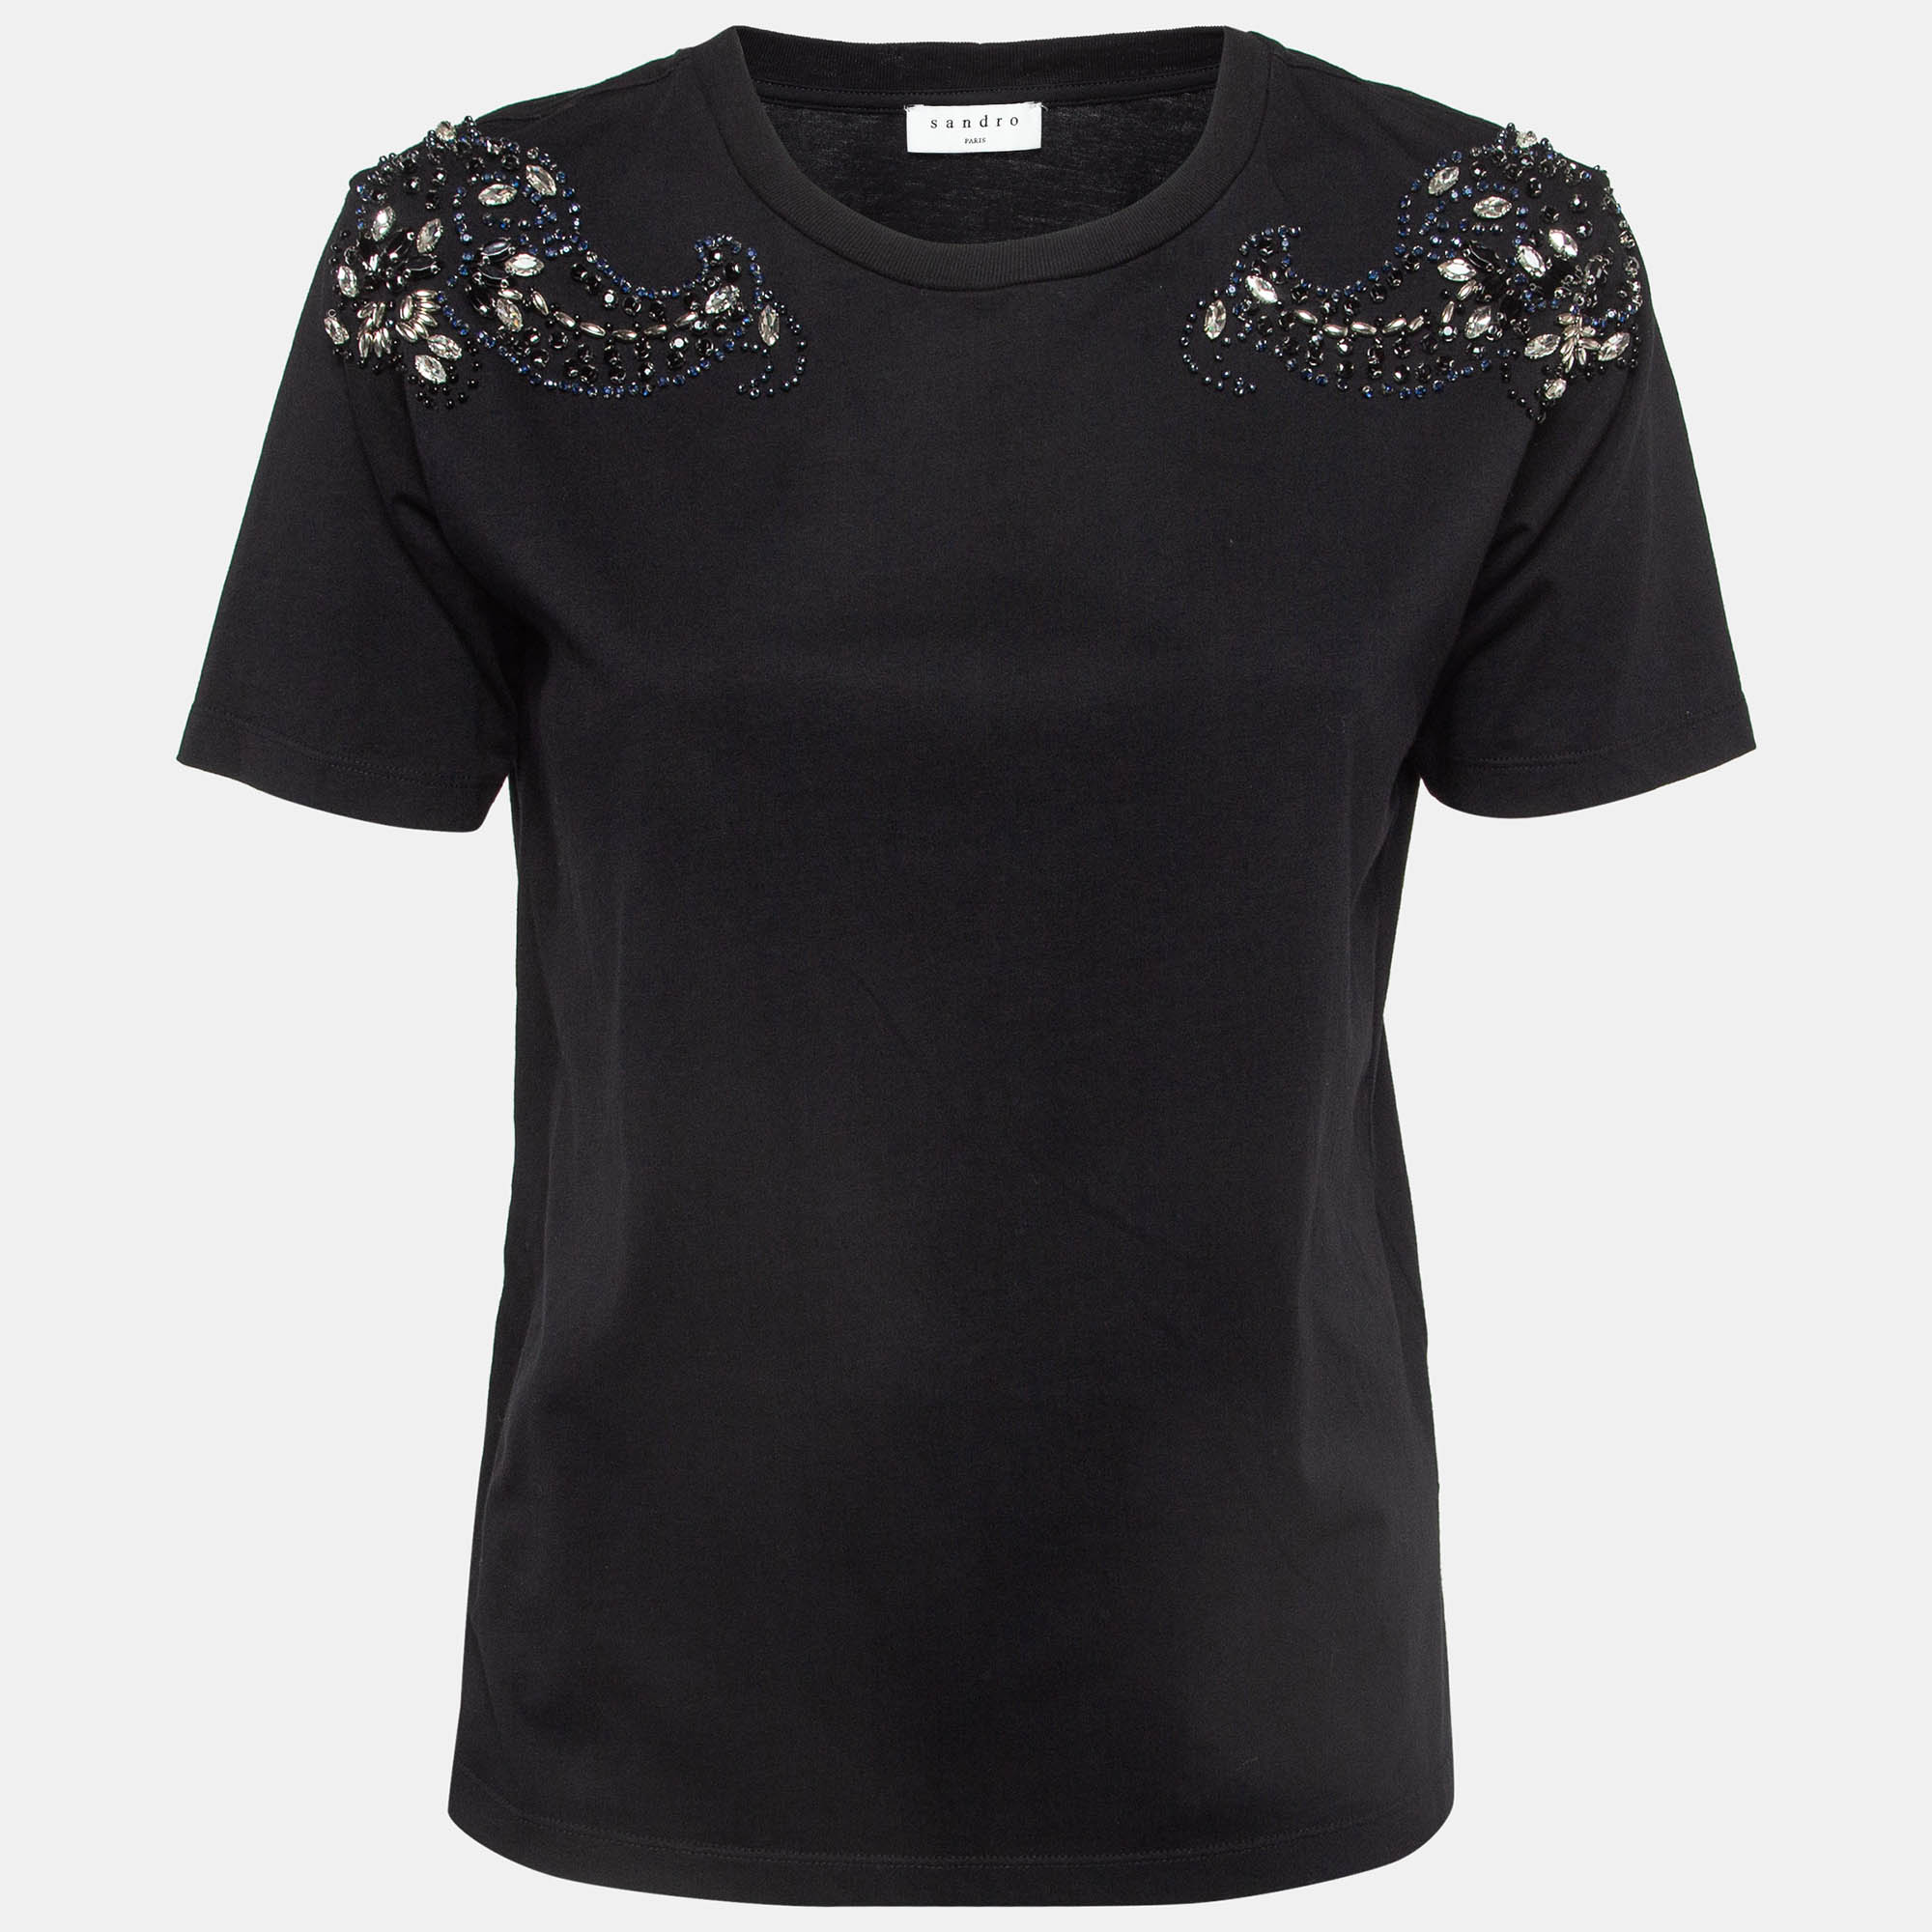 Sandro black cotton knit crystal embellished t-shirt s